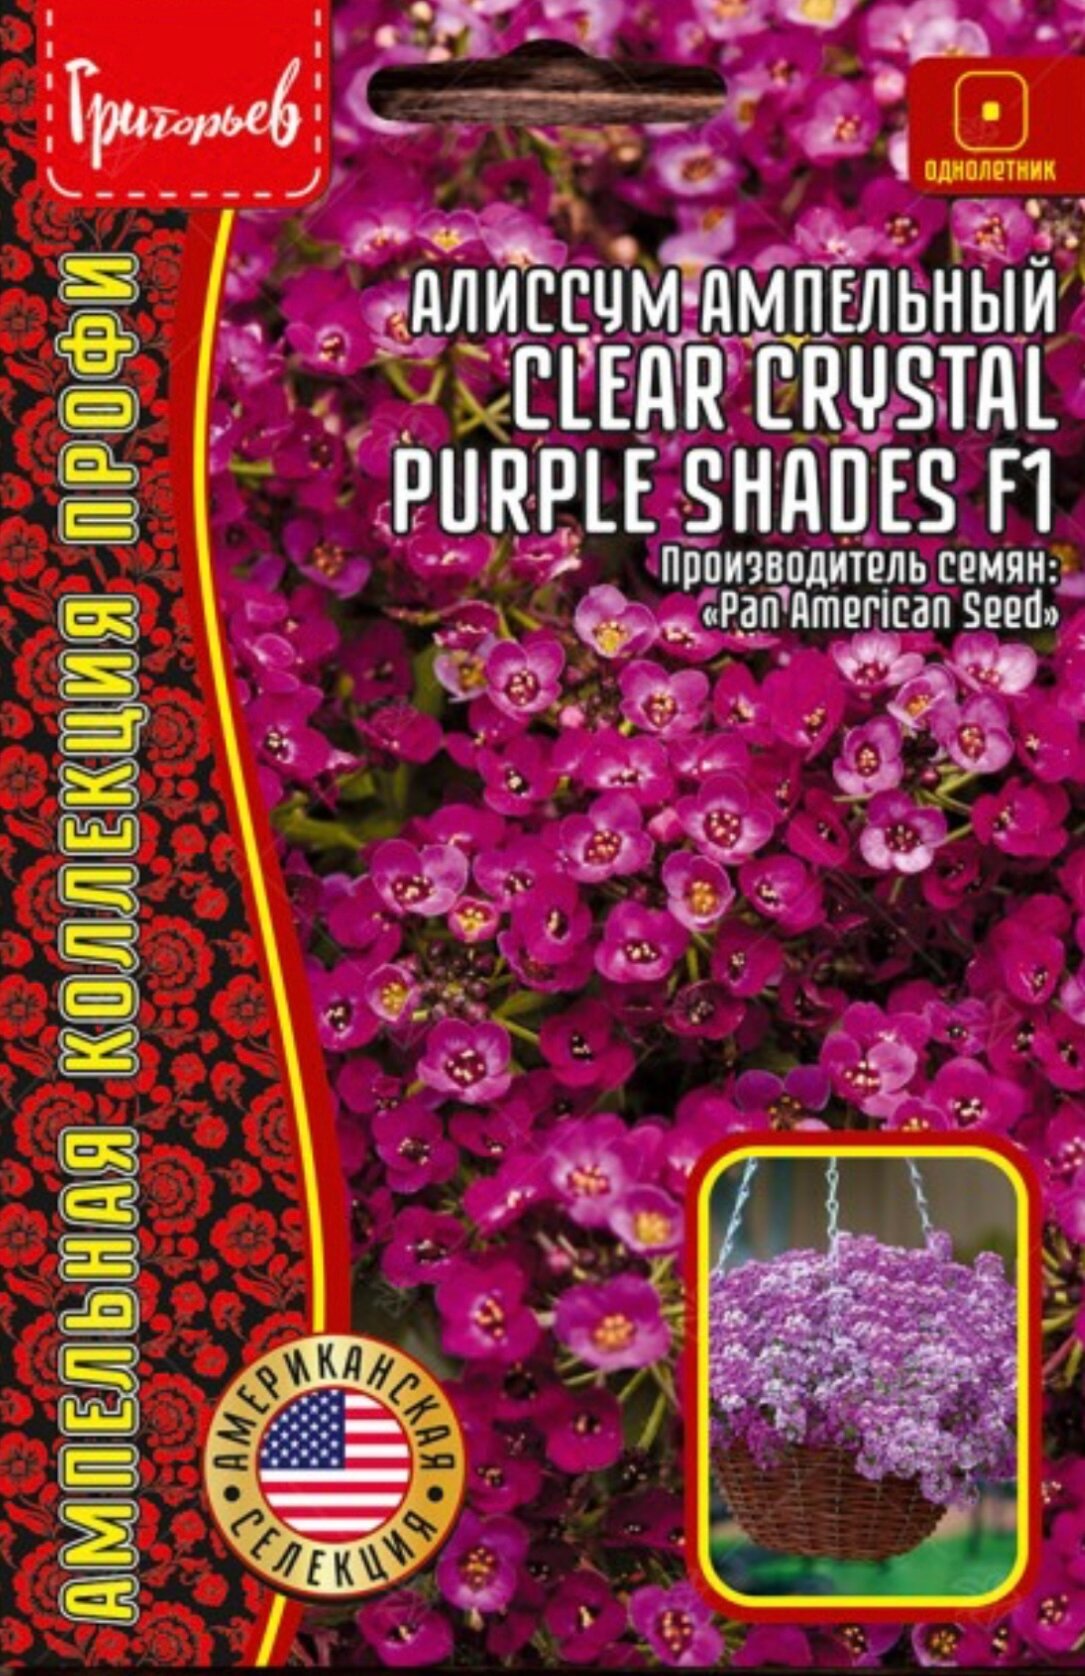 Семена Алиссума ампельного "Clear Crystal Purple Shades" F1 (5 мультидраже)